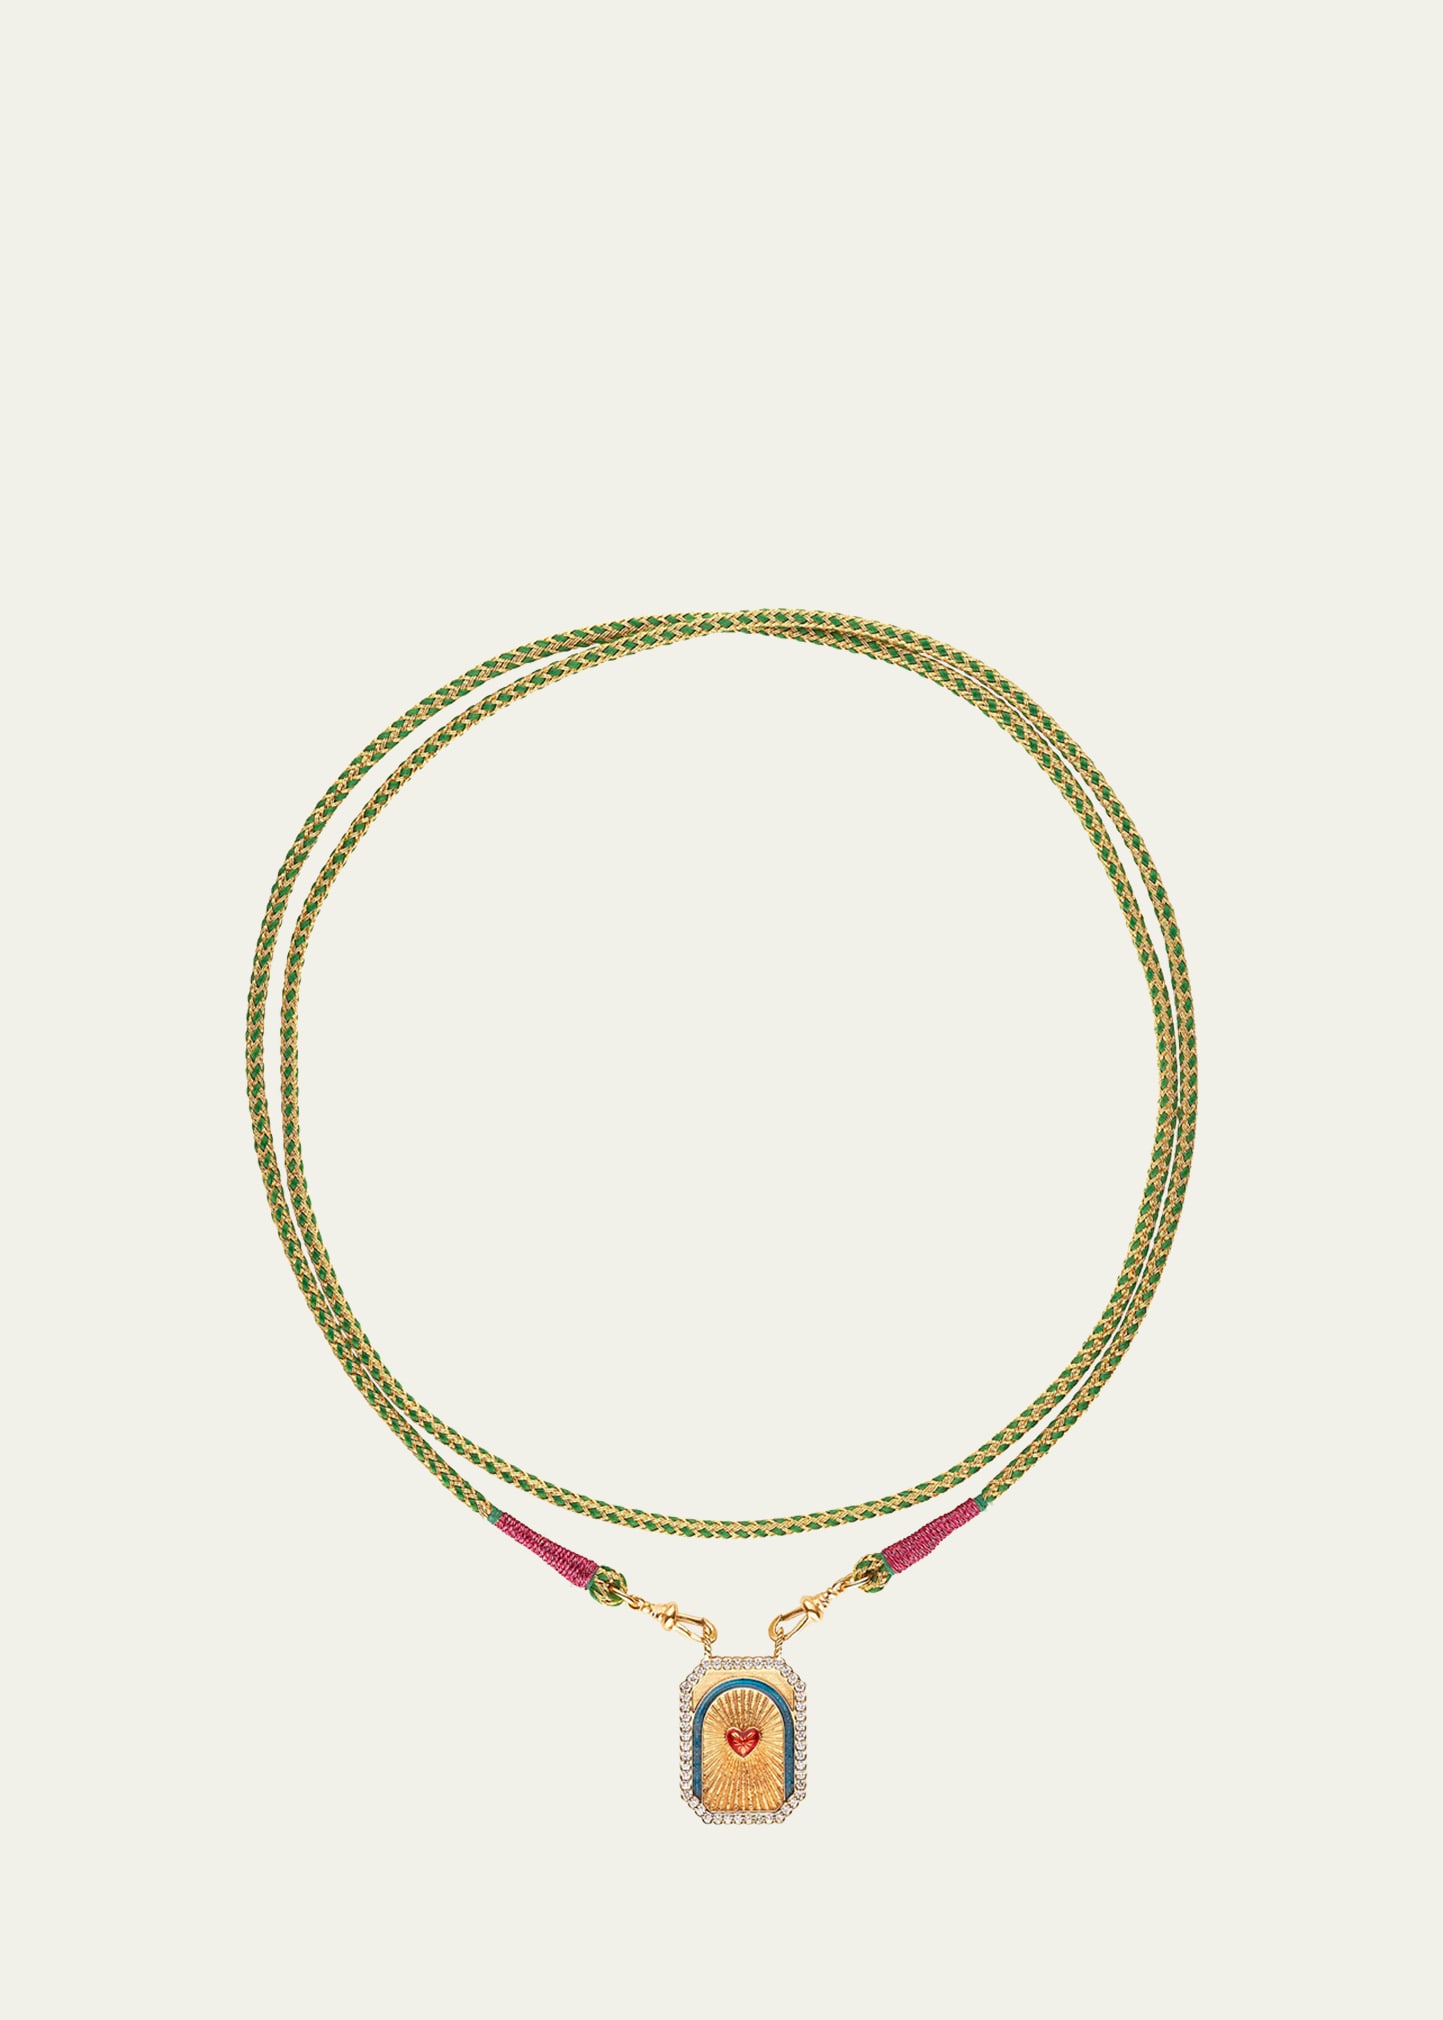 Marie Lichtenberg 18k Yellow Gold Heart Cord Wrap Necklace